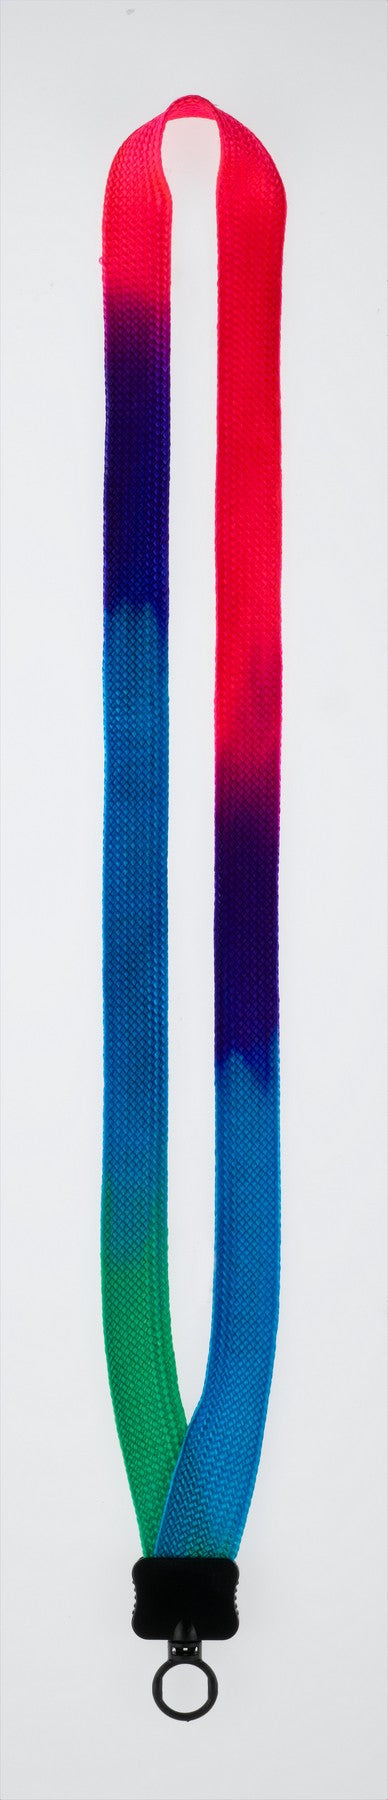 ¬æ" Tie Dye Lanyard w/Plastic Clamshell & O-Ring